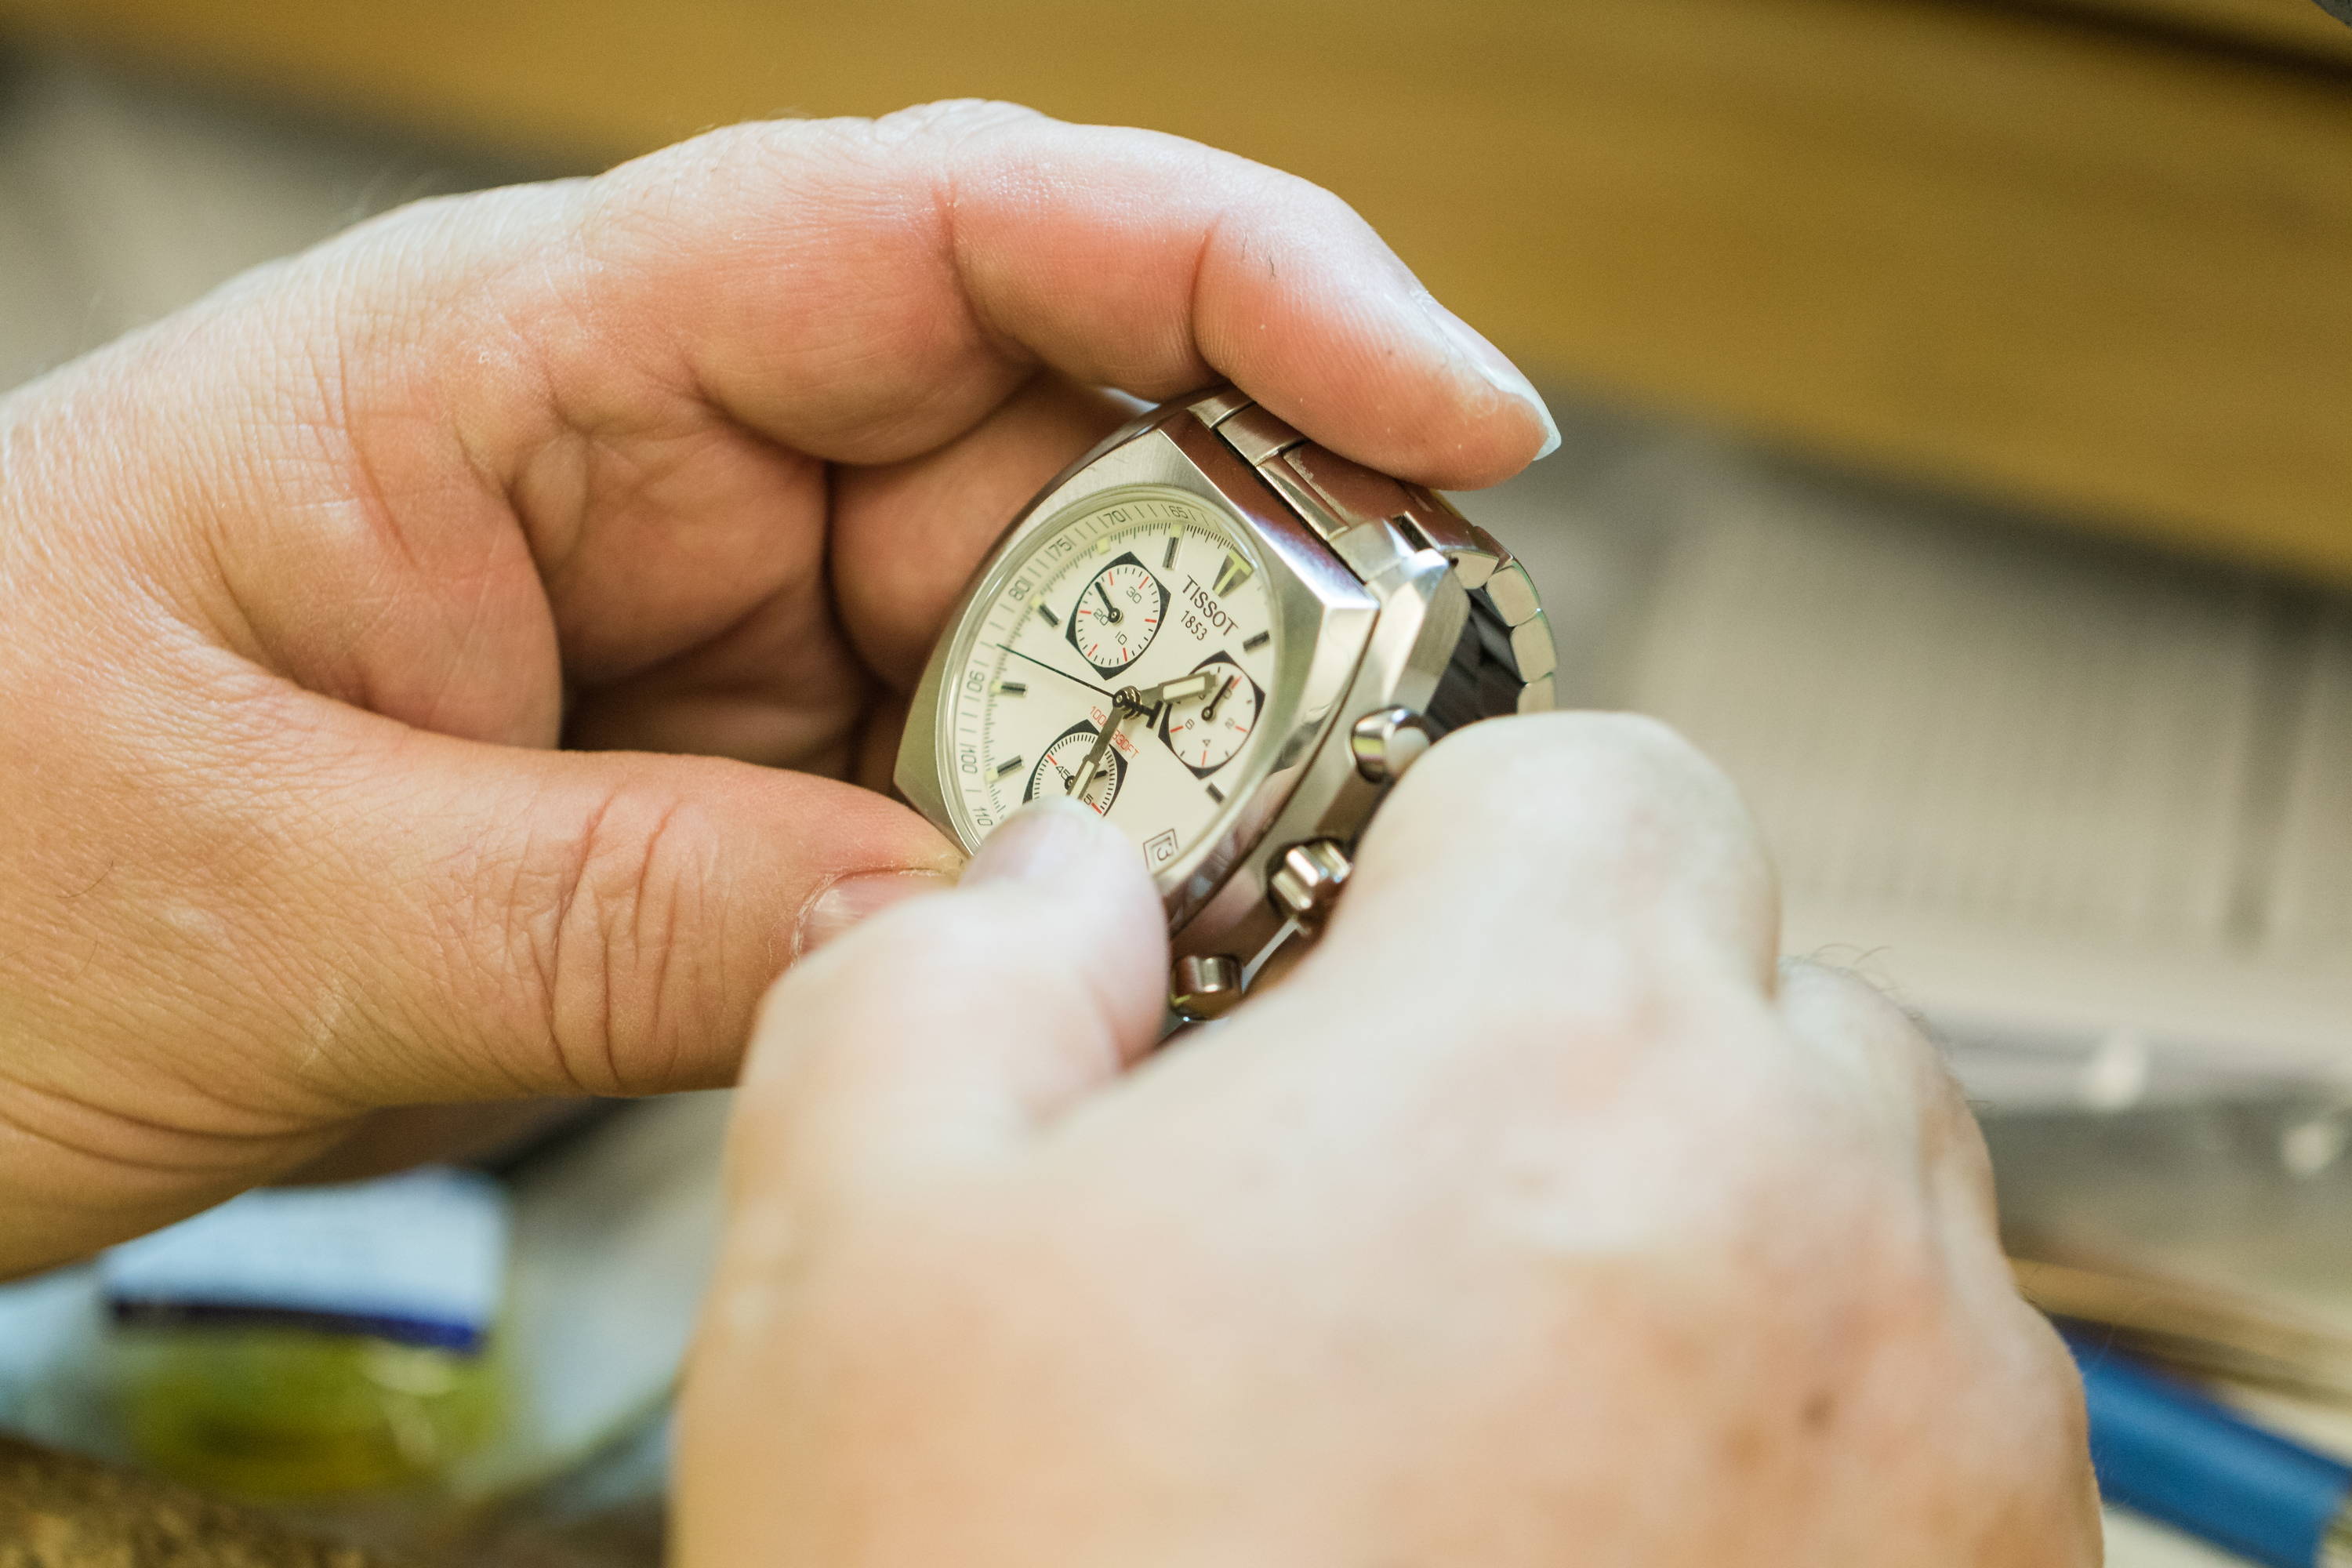 Jeweler inspecting a watch